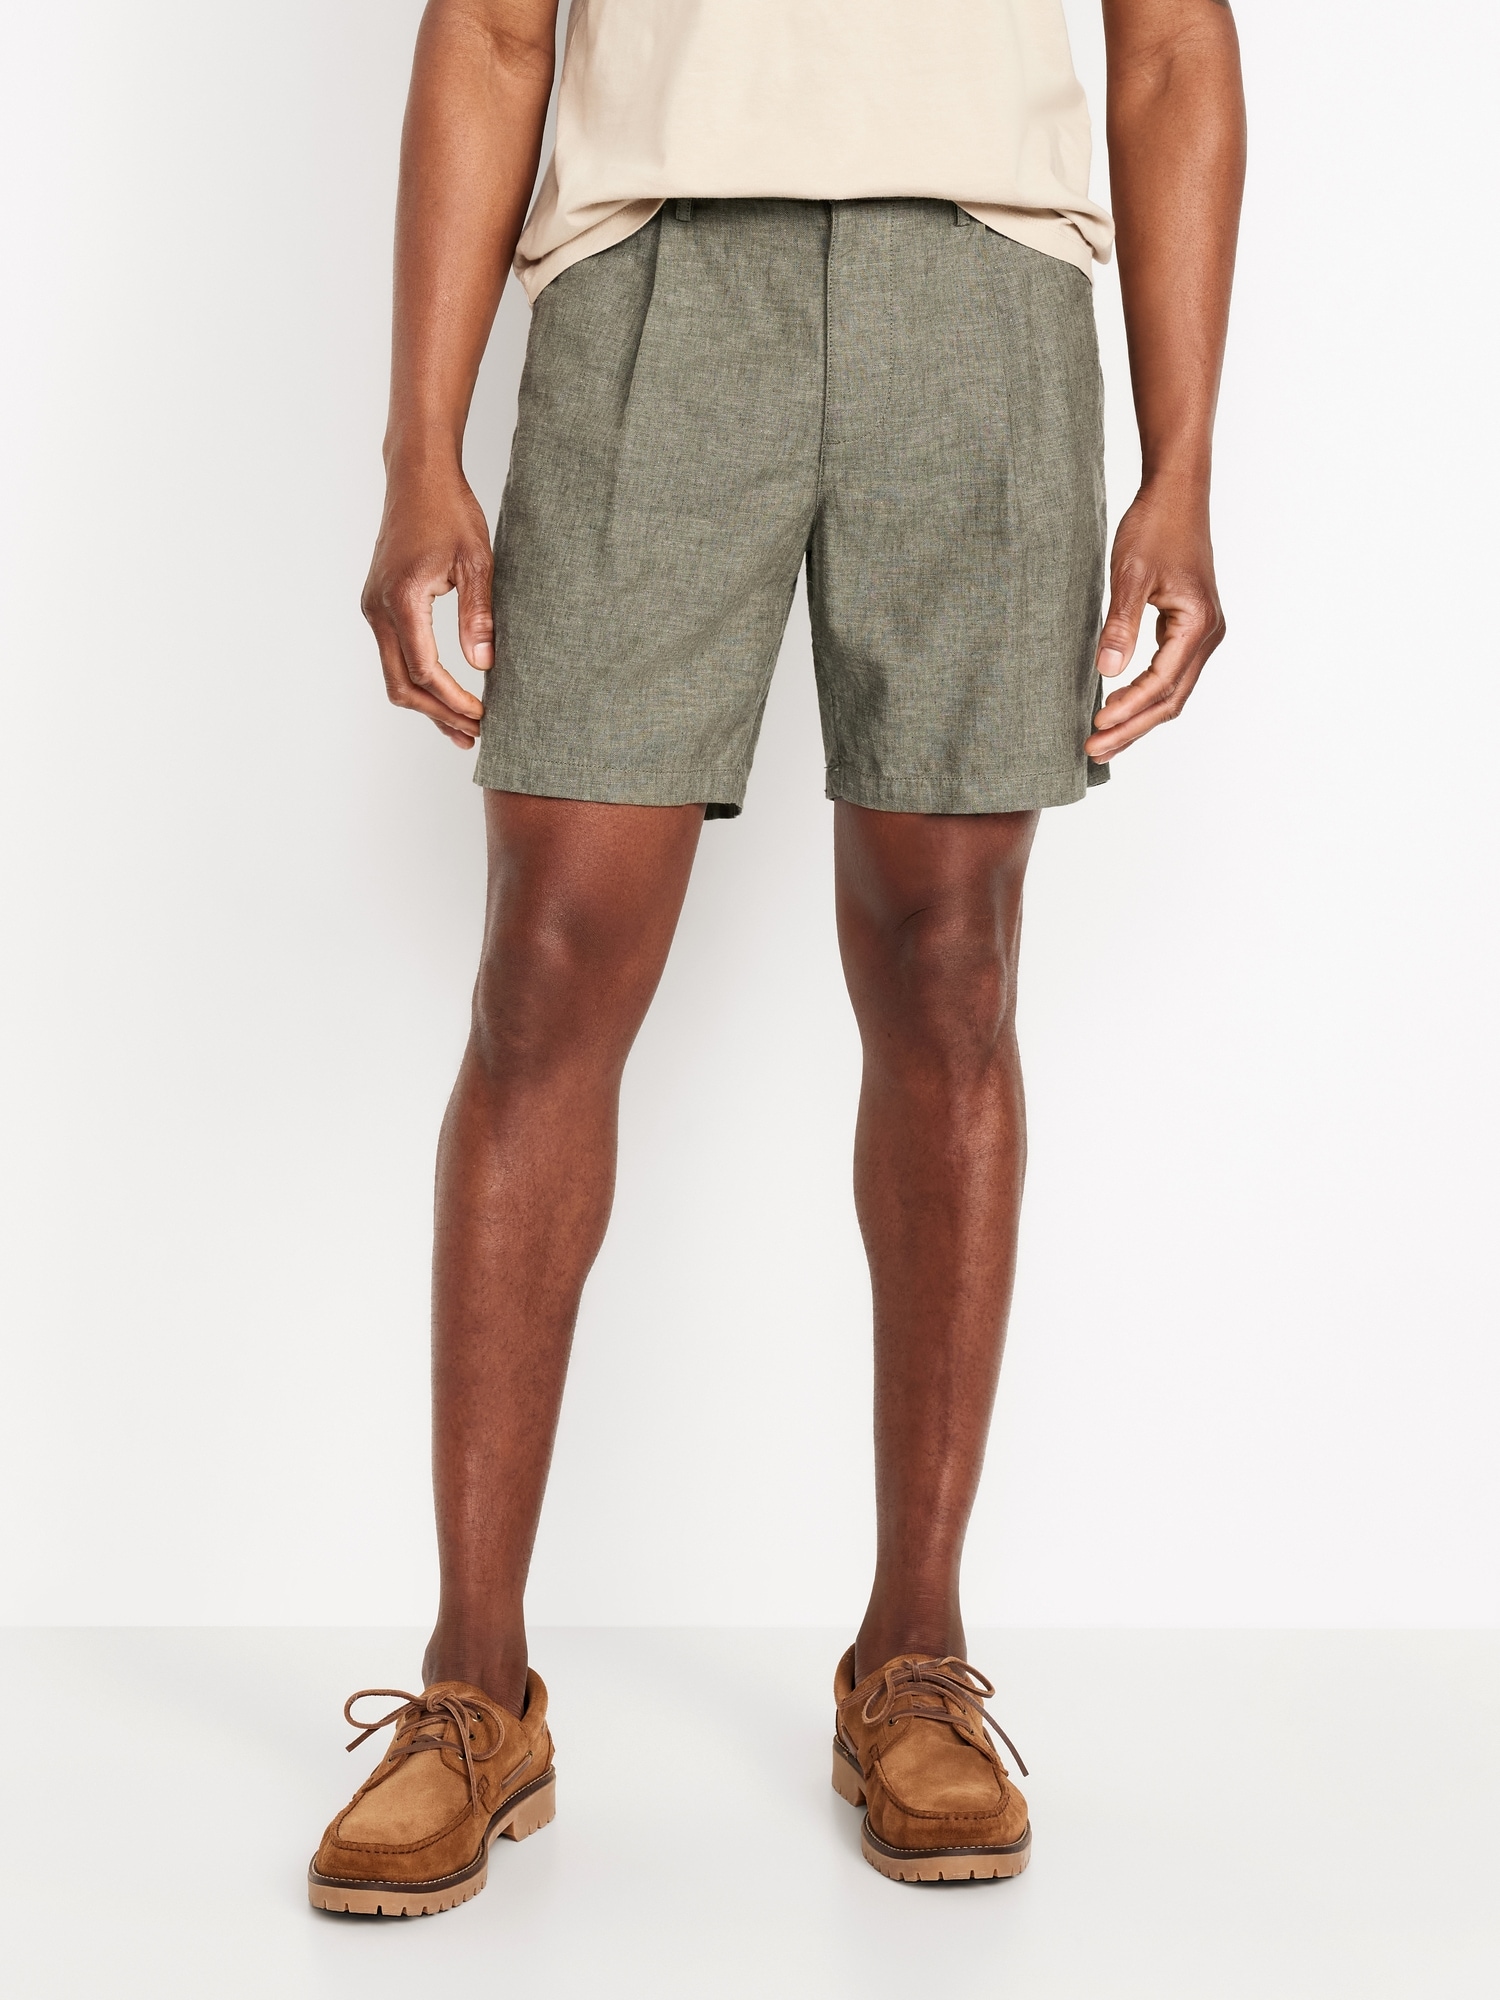 Slim Linen-Blend Chino Shorts -- 7-inch inseam